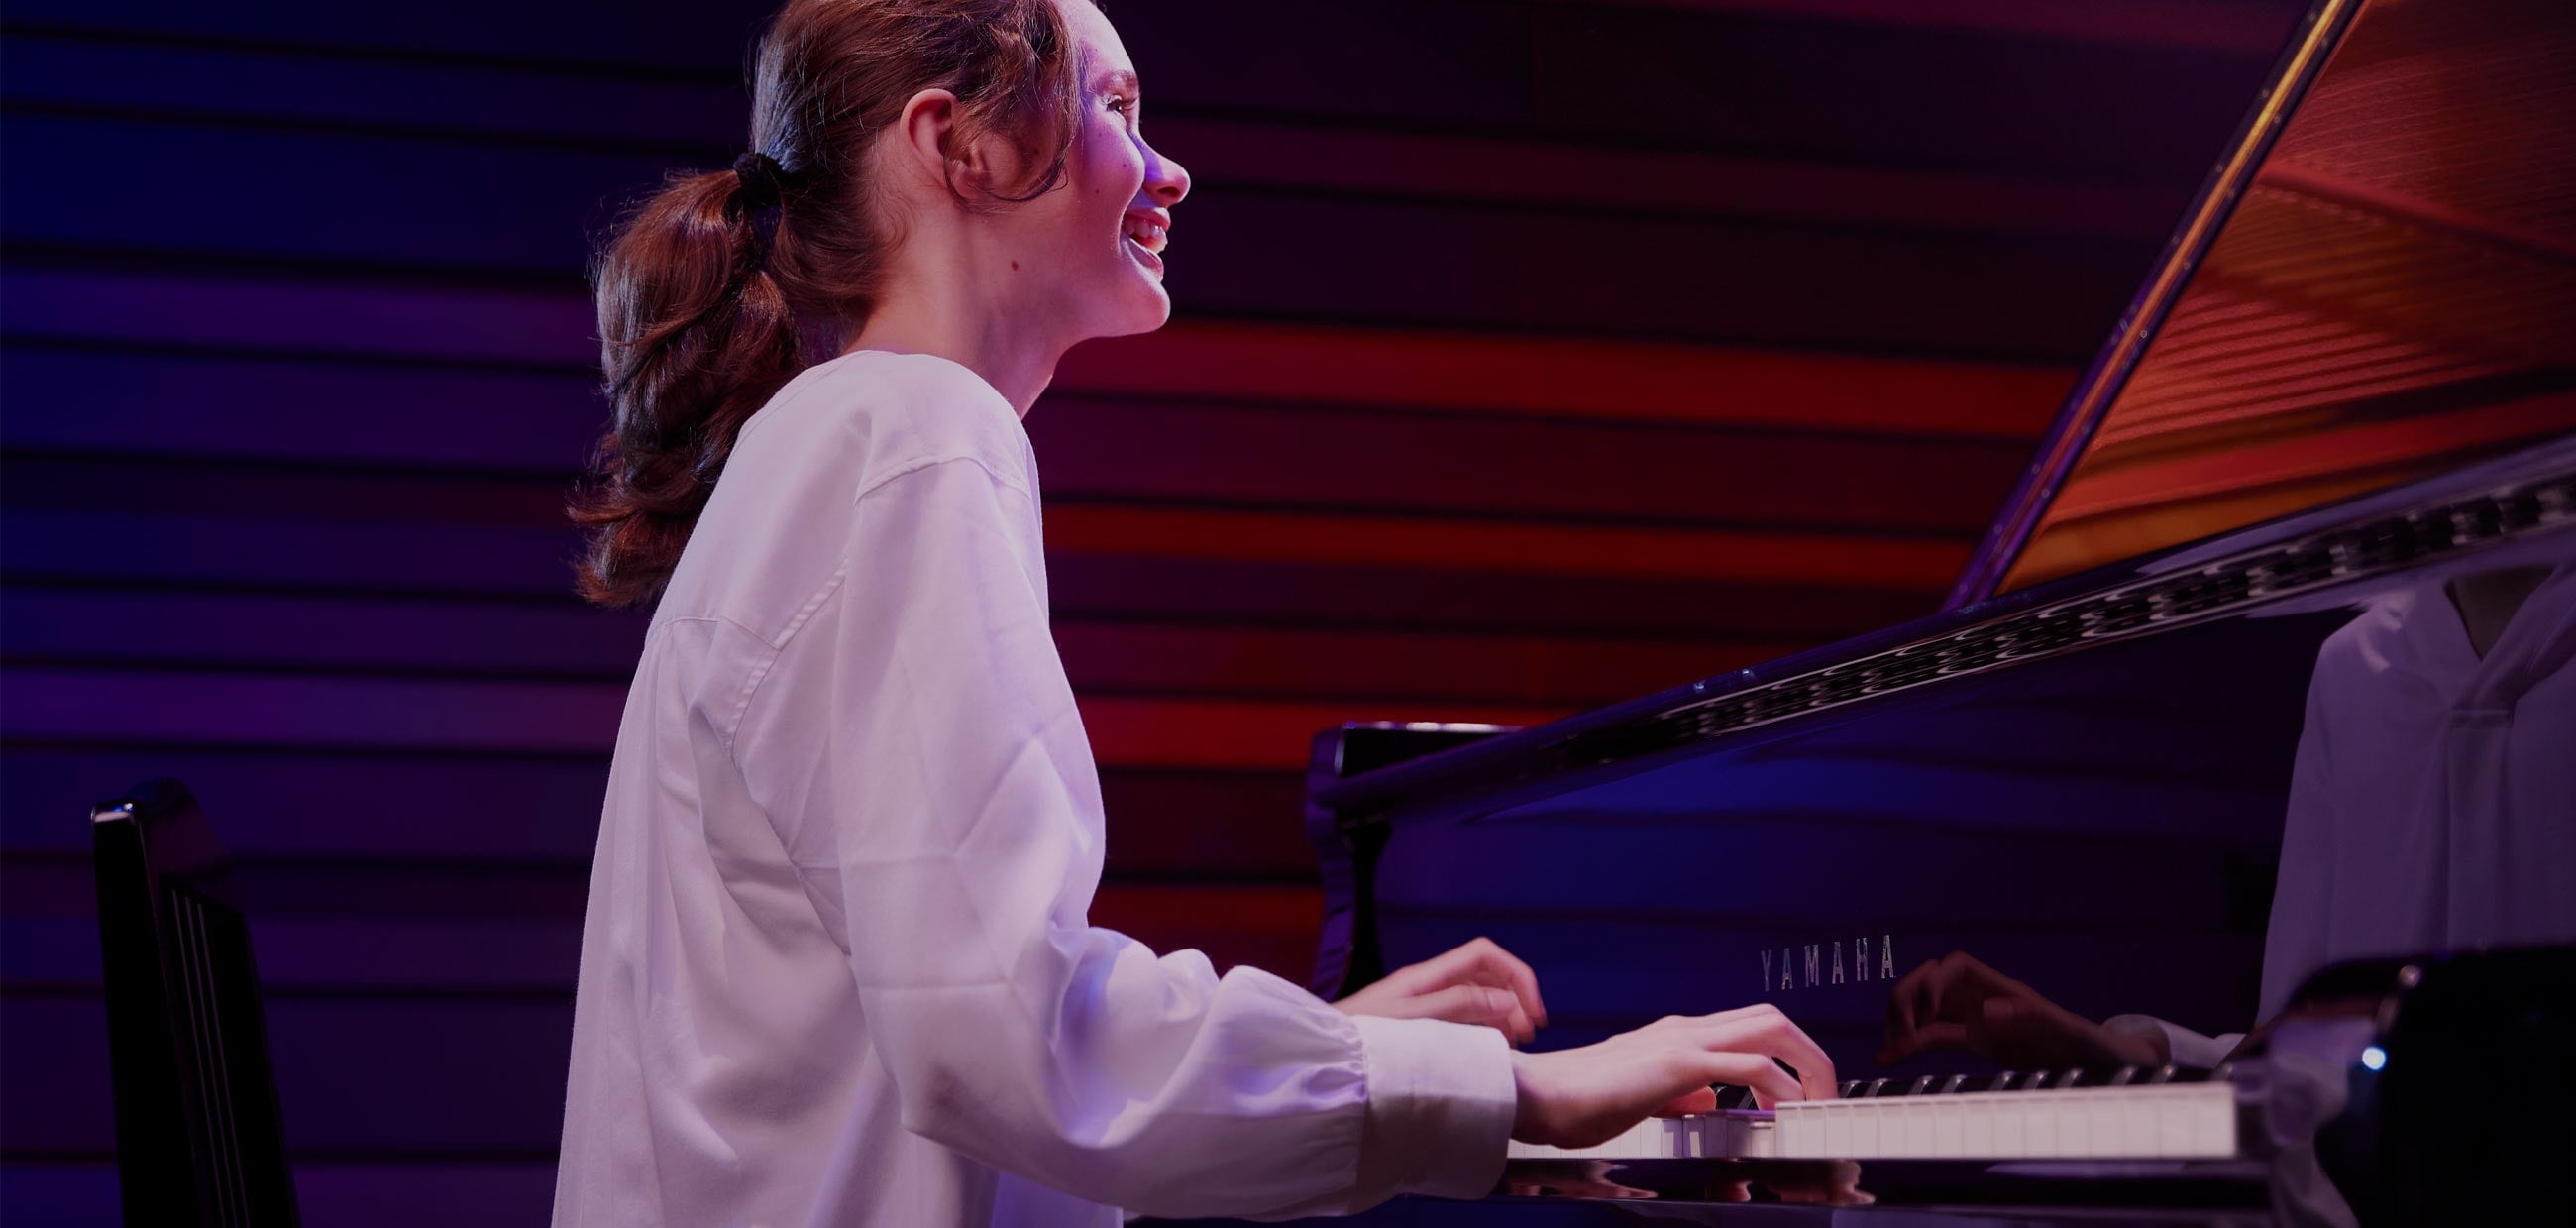 Emma Hansen, 13 years old. Learns keyboard and piano at the Yamaha Music School